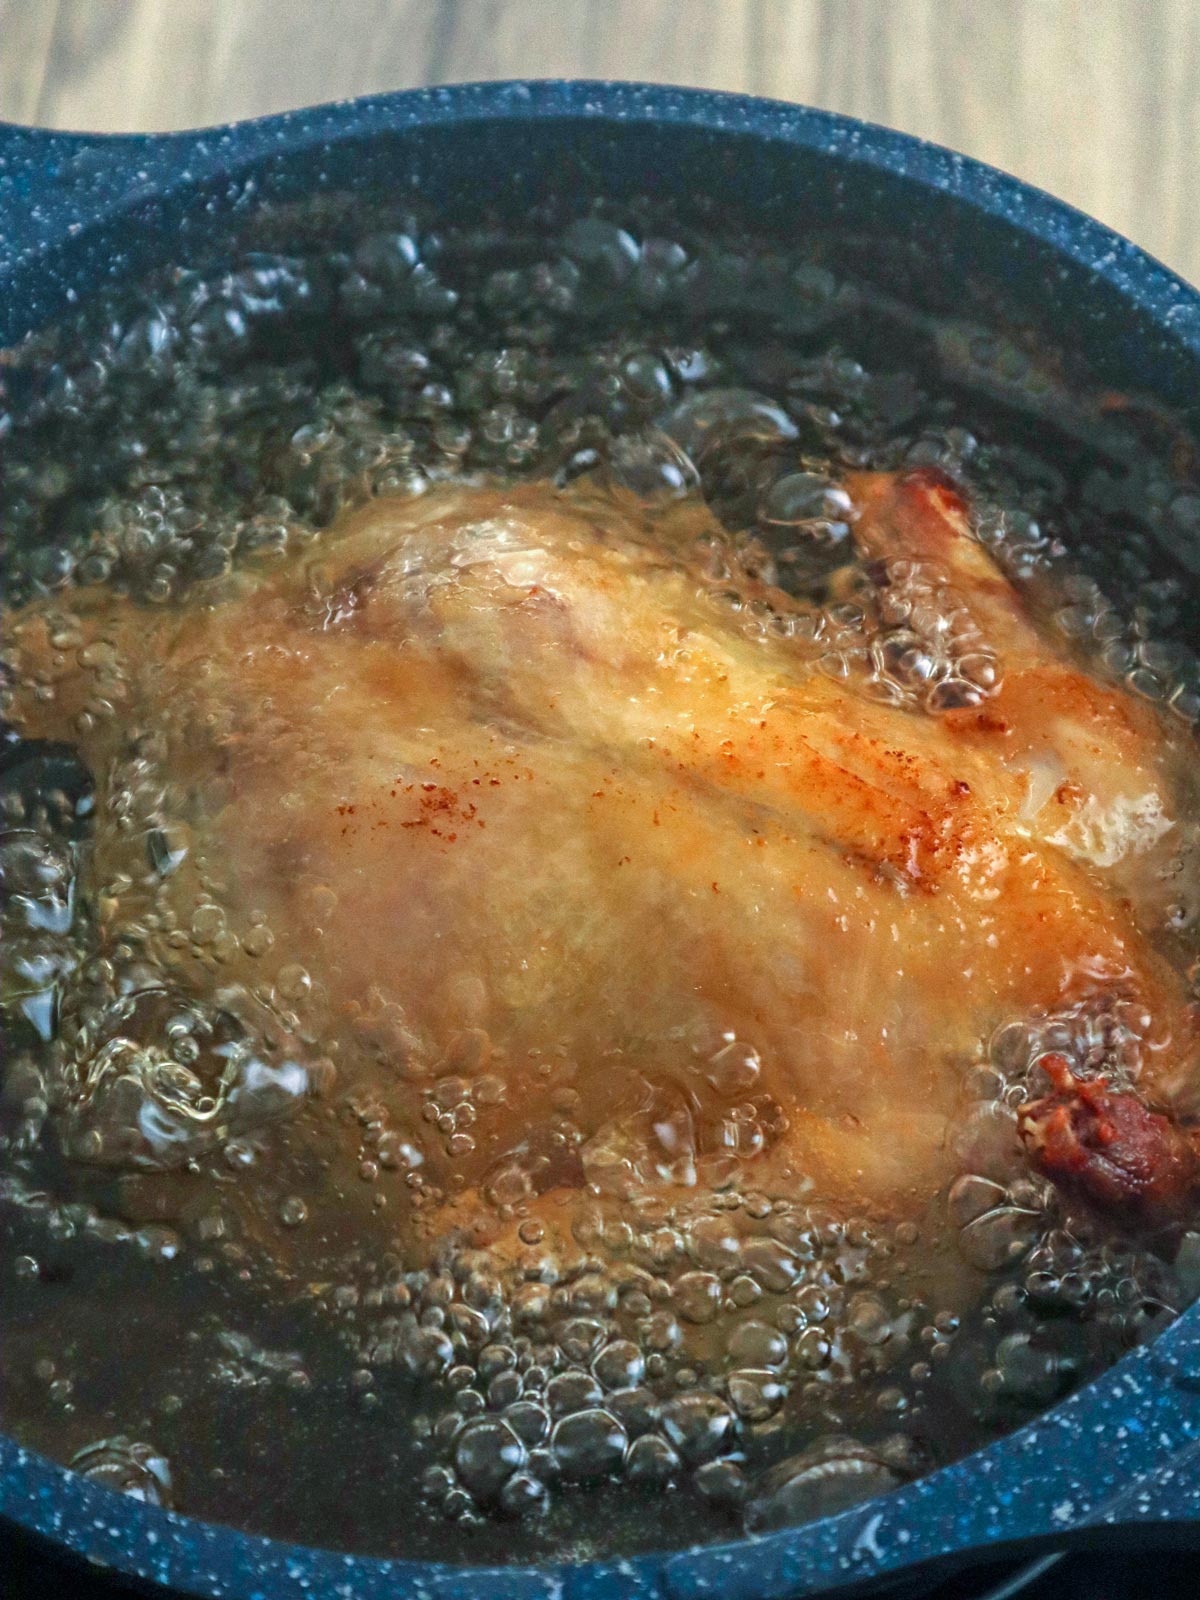 deep-frying chicken in hot oil in a pot